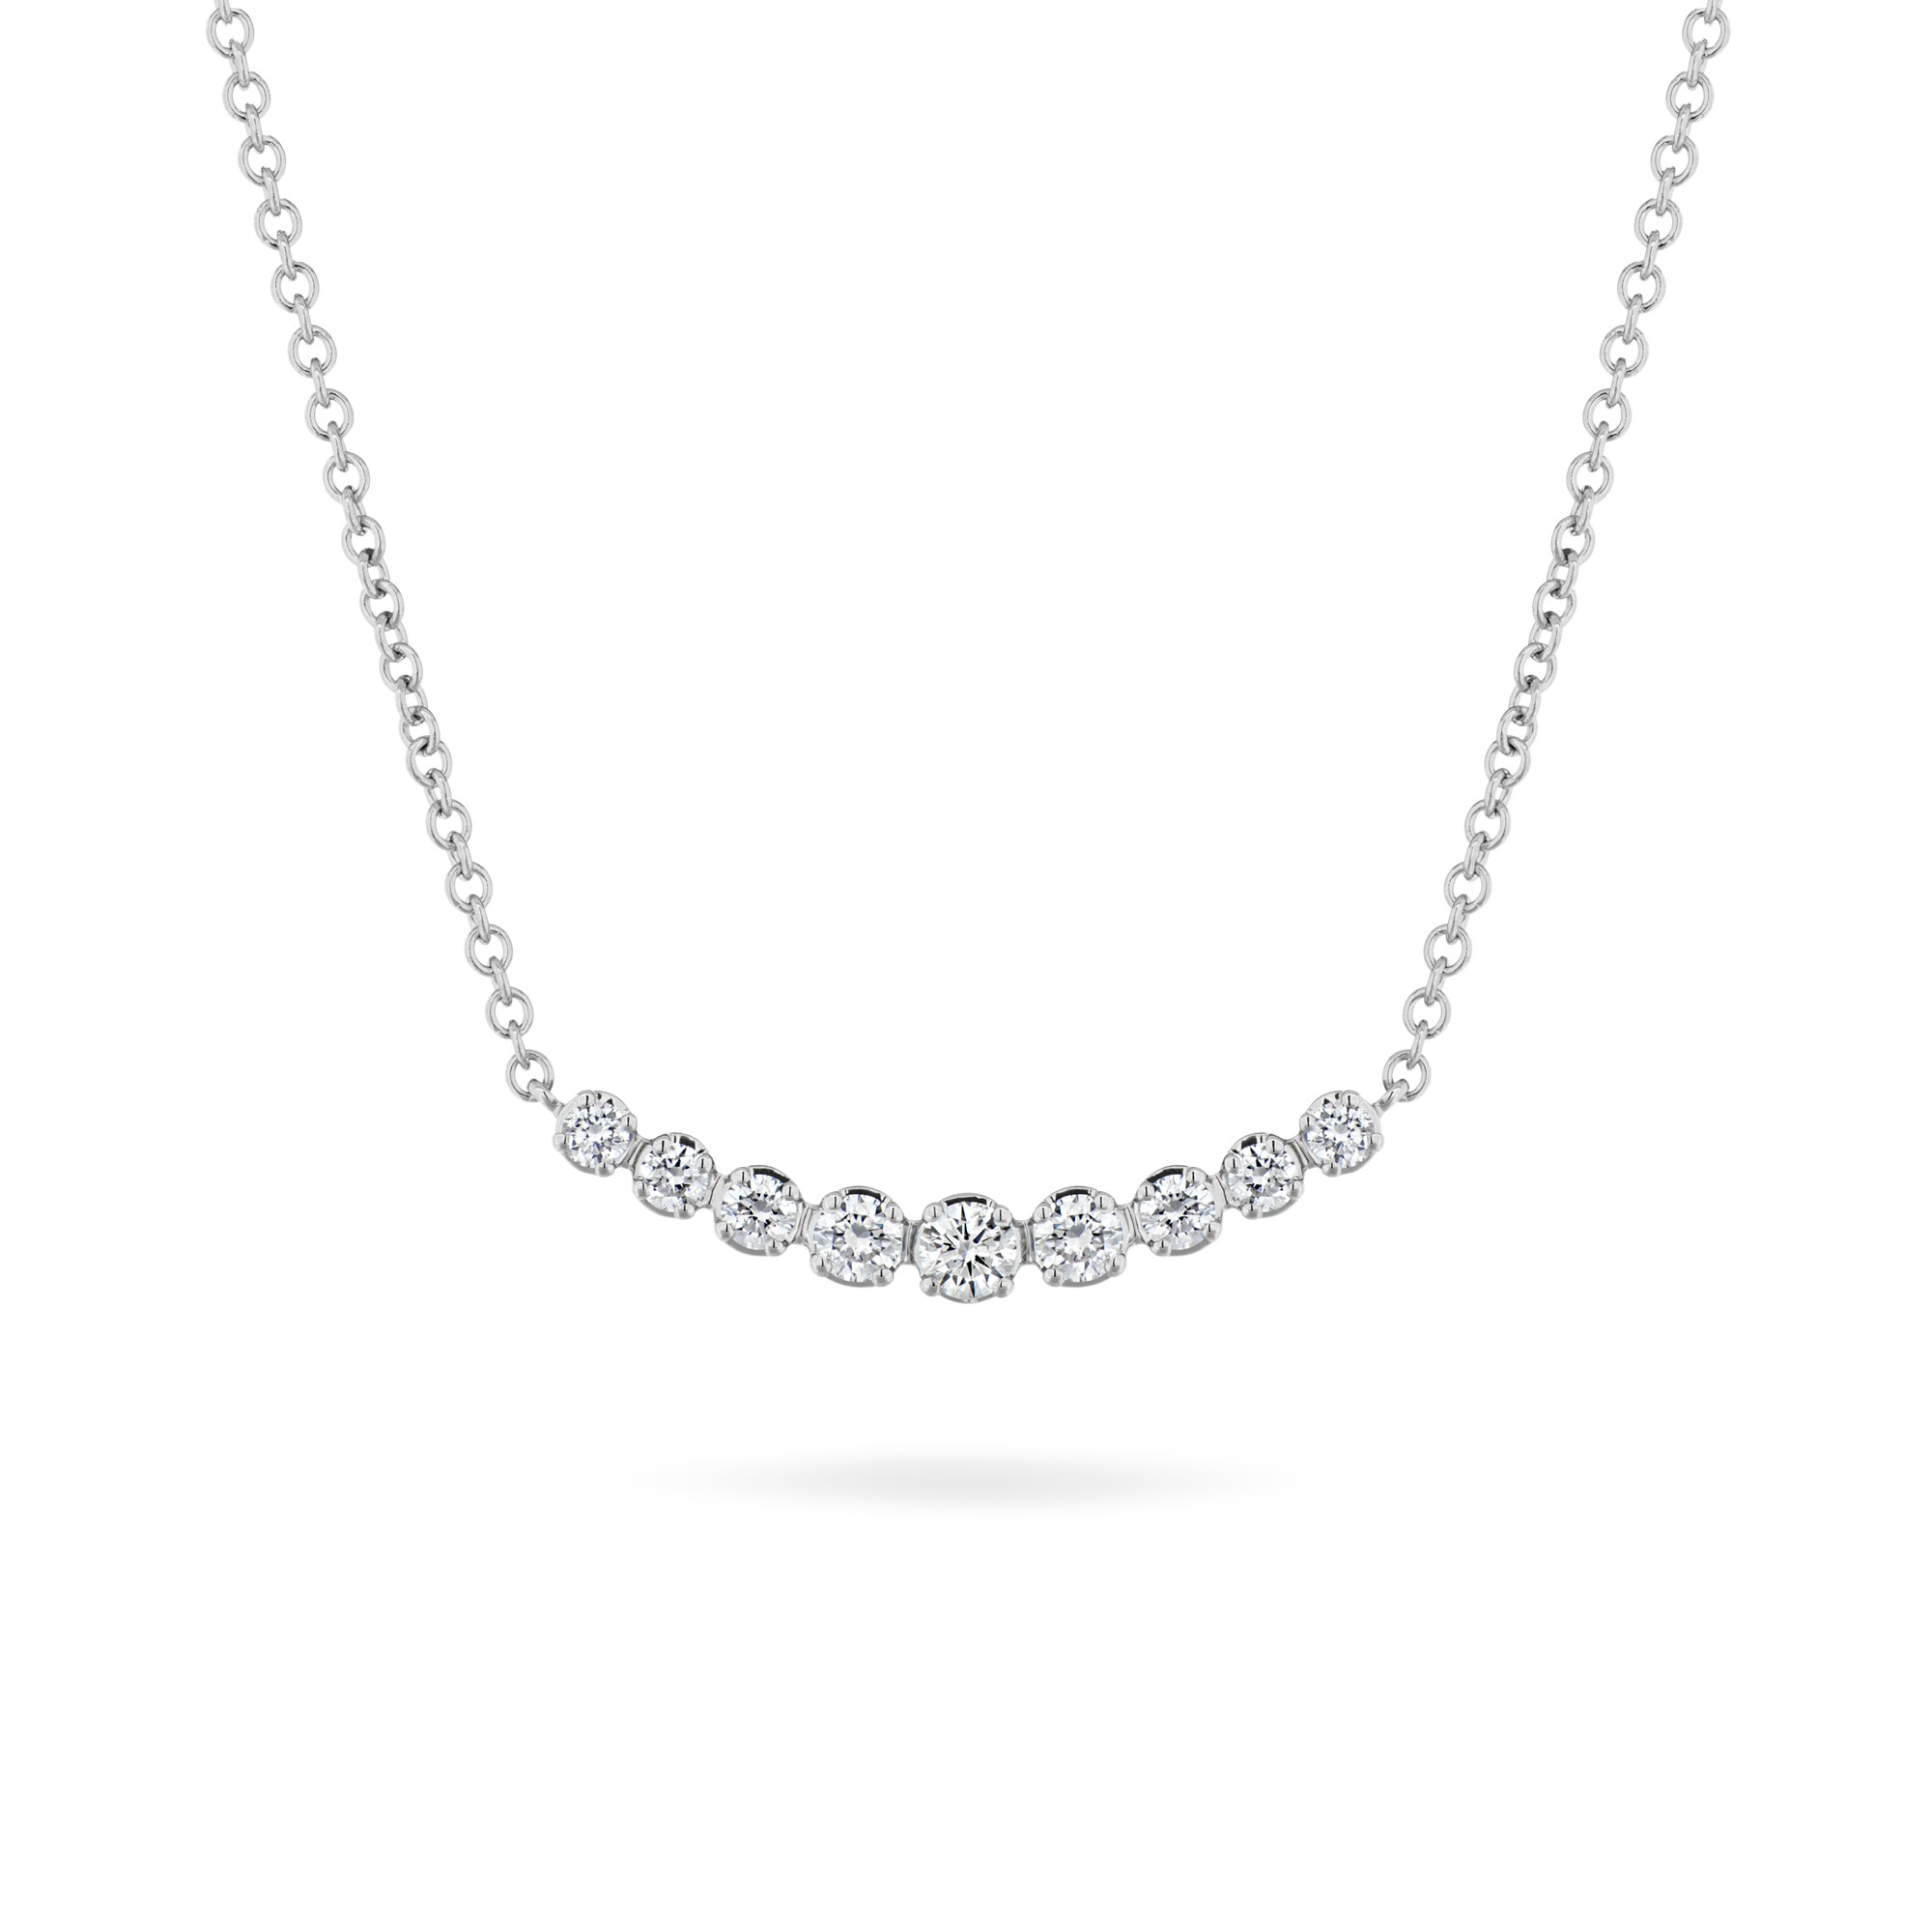 Graduated diamond bar necklace - Minichiello Jewellers